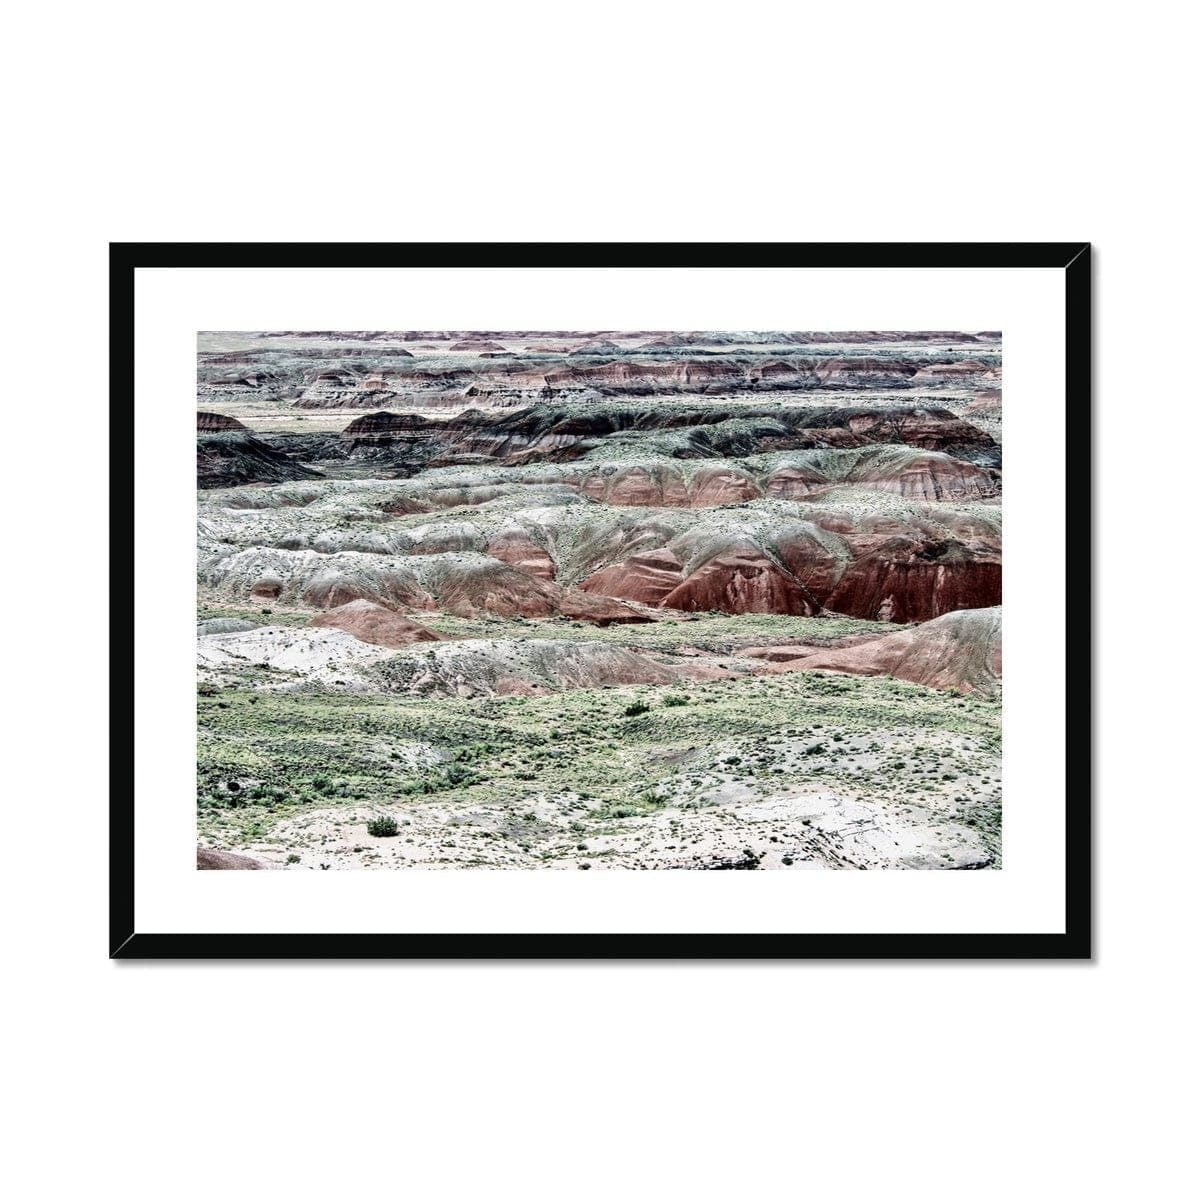 Seek & Ramble Framed A4 Landscape / Black Frame The Painted Desert Framed & Mounted Print